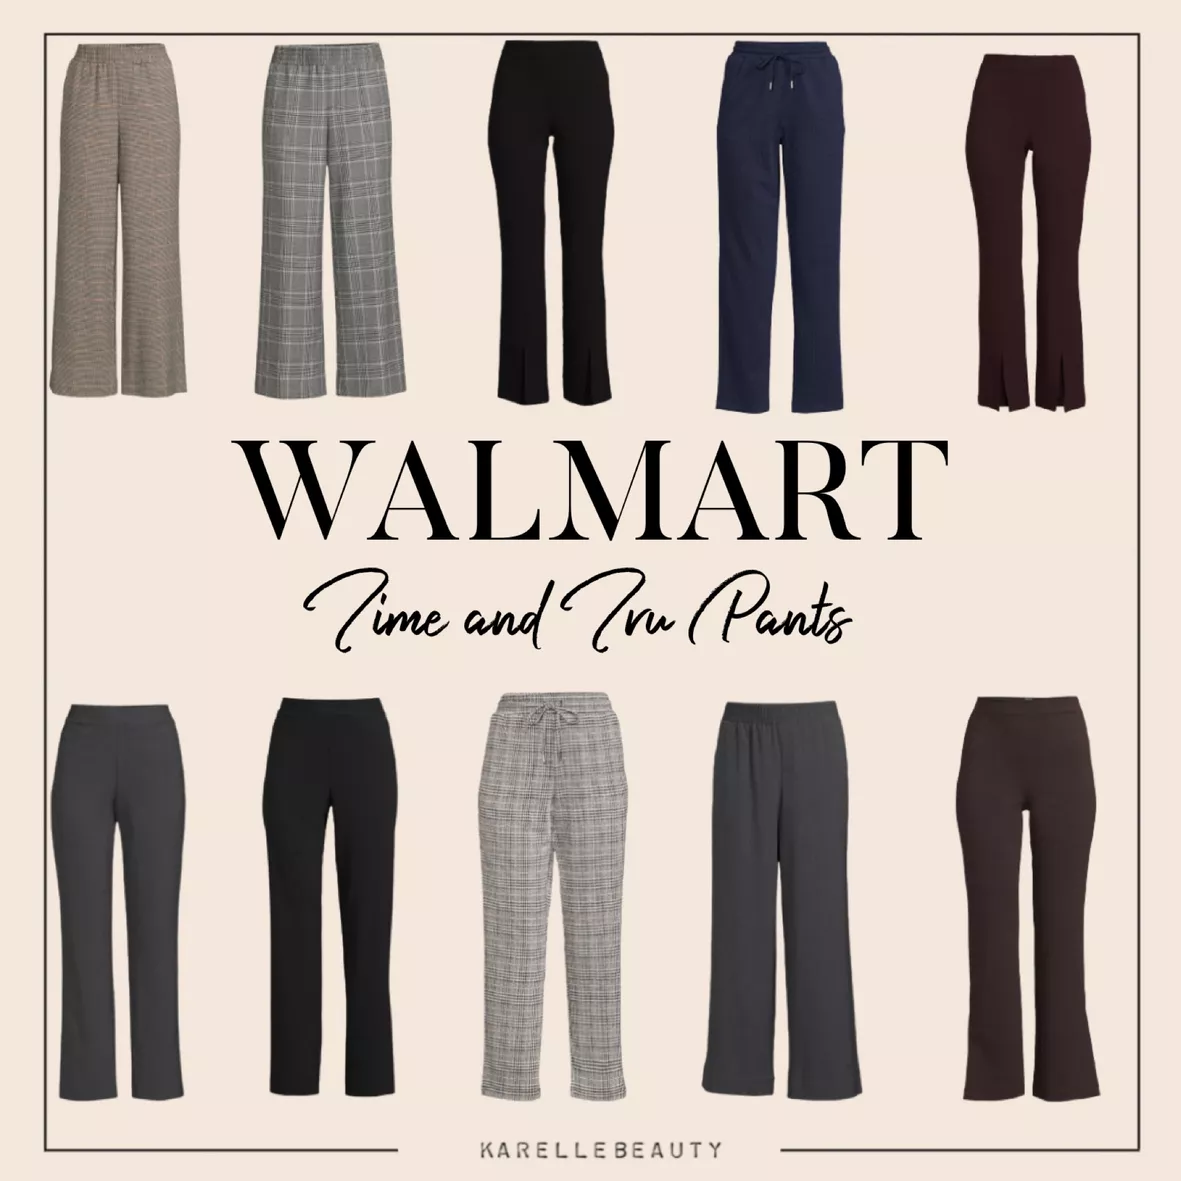 Time and Tru Women's Flare Ponte Pants, 30 Inseam for Regular -  Walmart.com